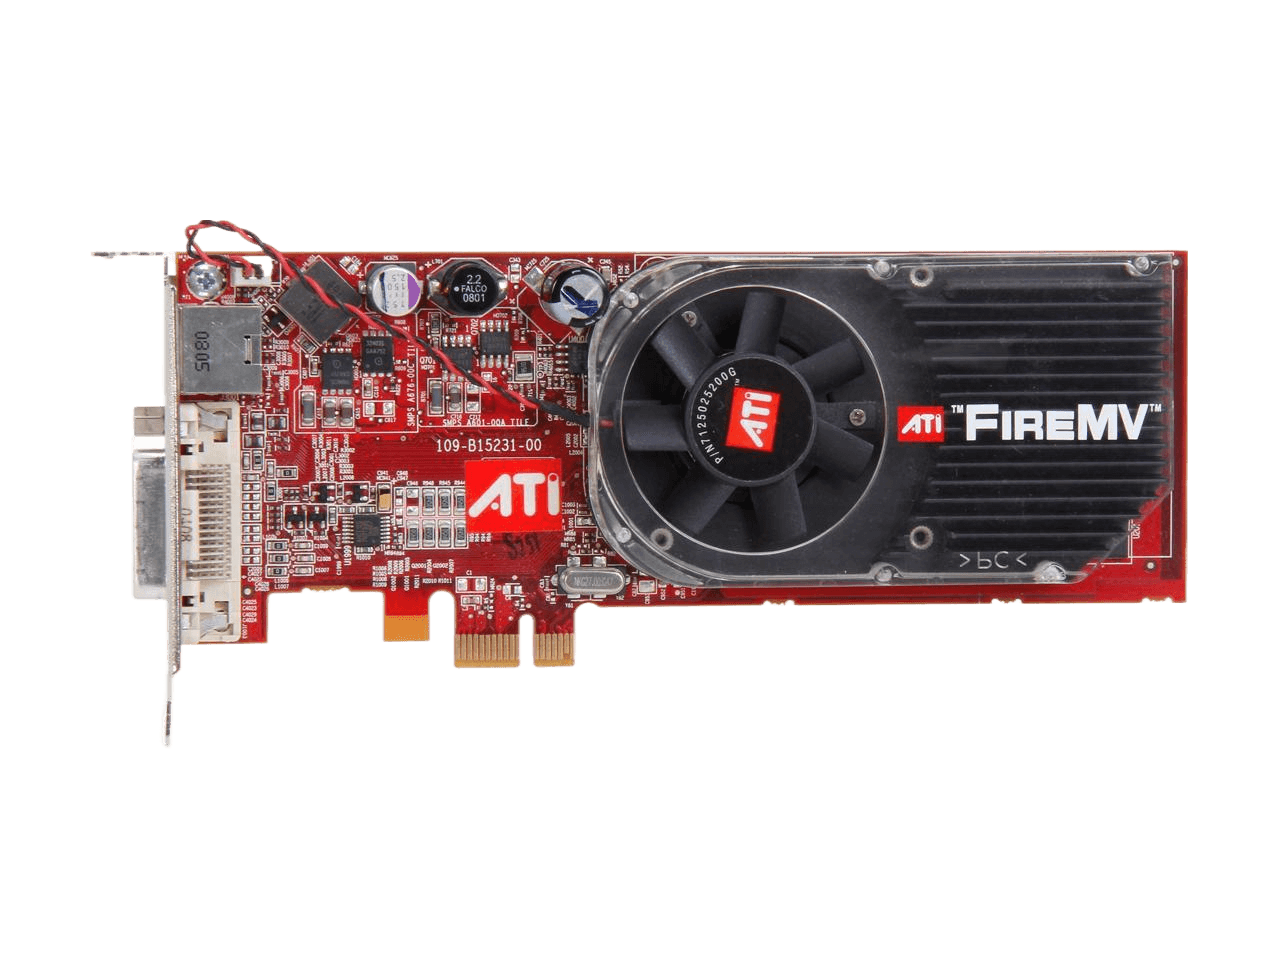 AMD ATI FireMV 2250 VIDEO-MV-2250-1X 256MB DDR2 PCI Express x1 Low Profile Workstation Video Card